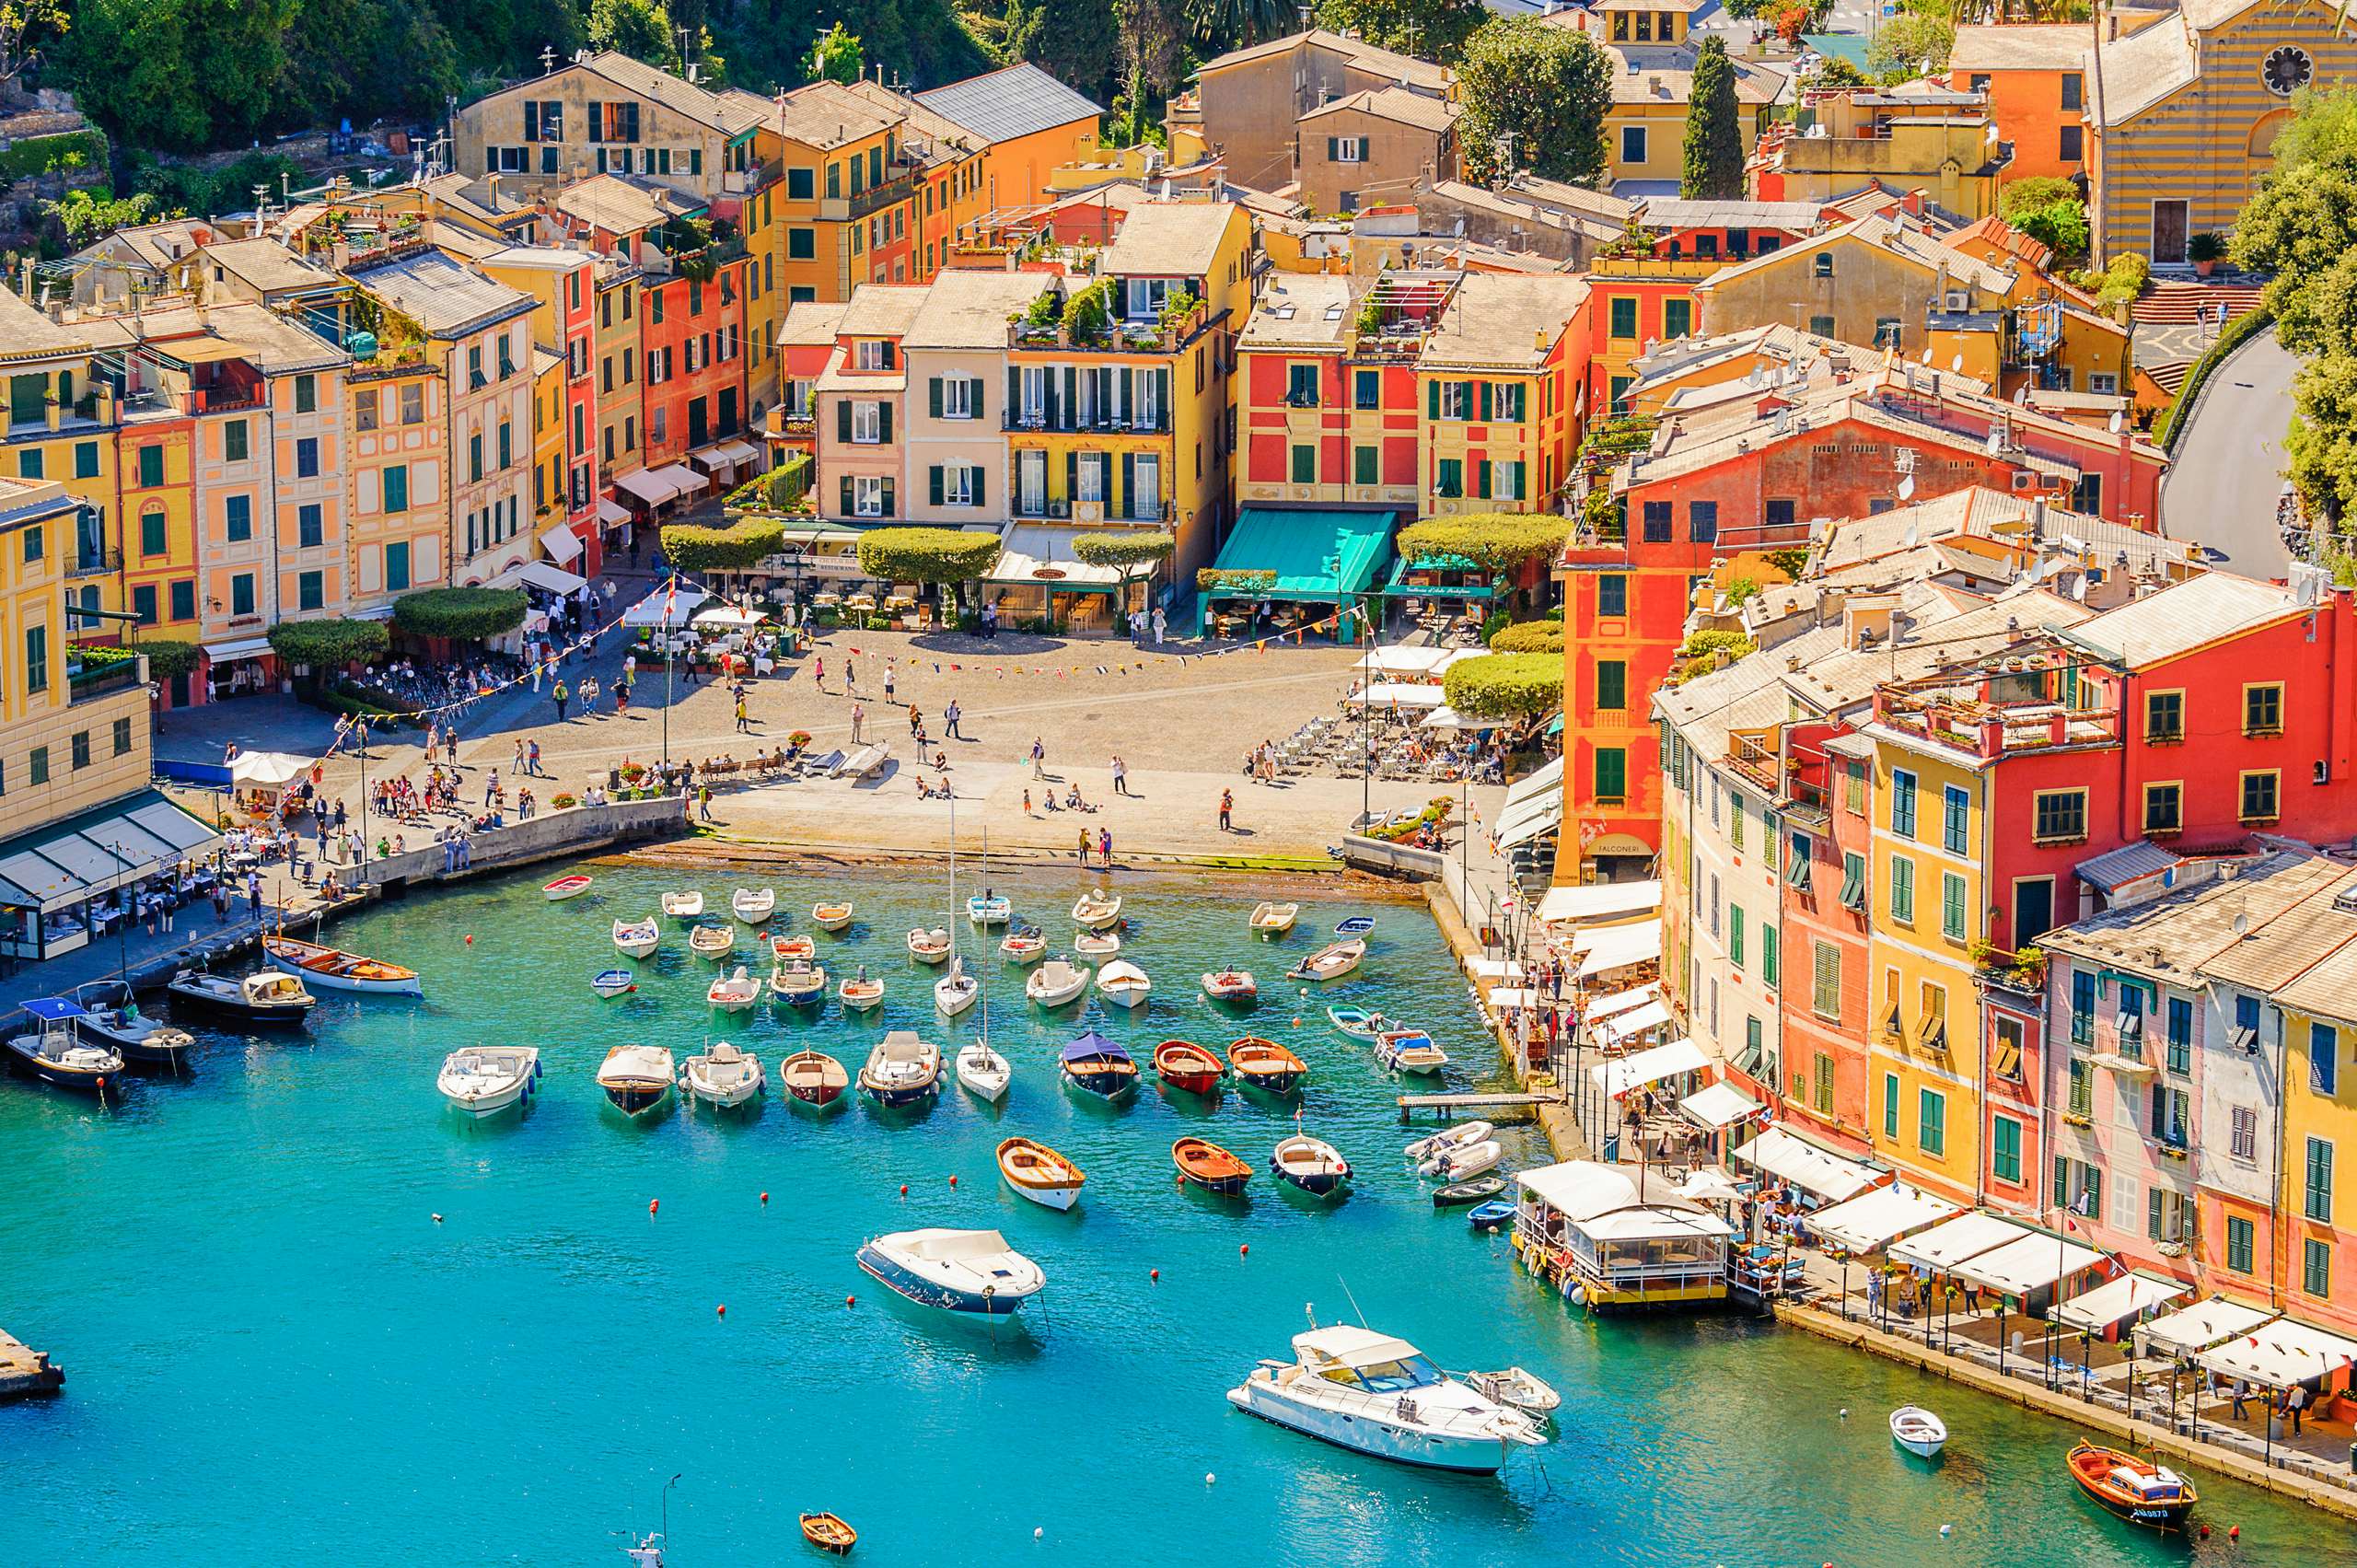 Vibrant harbor of Portofino with colorful buildings and luxury yachts, epitomizing Italian Riviera elegance.